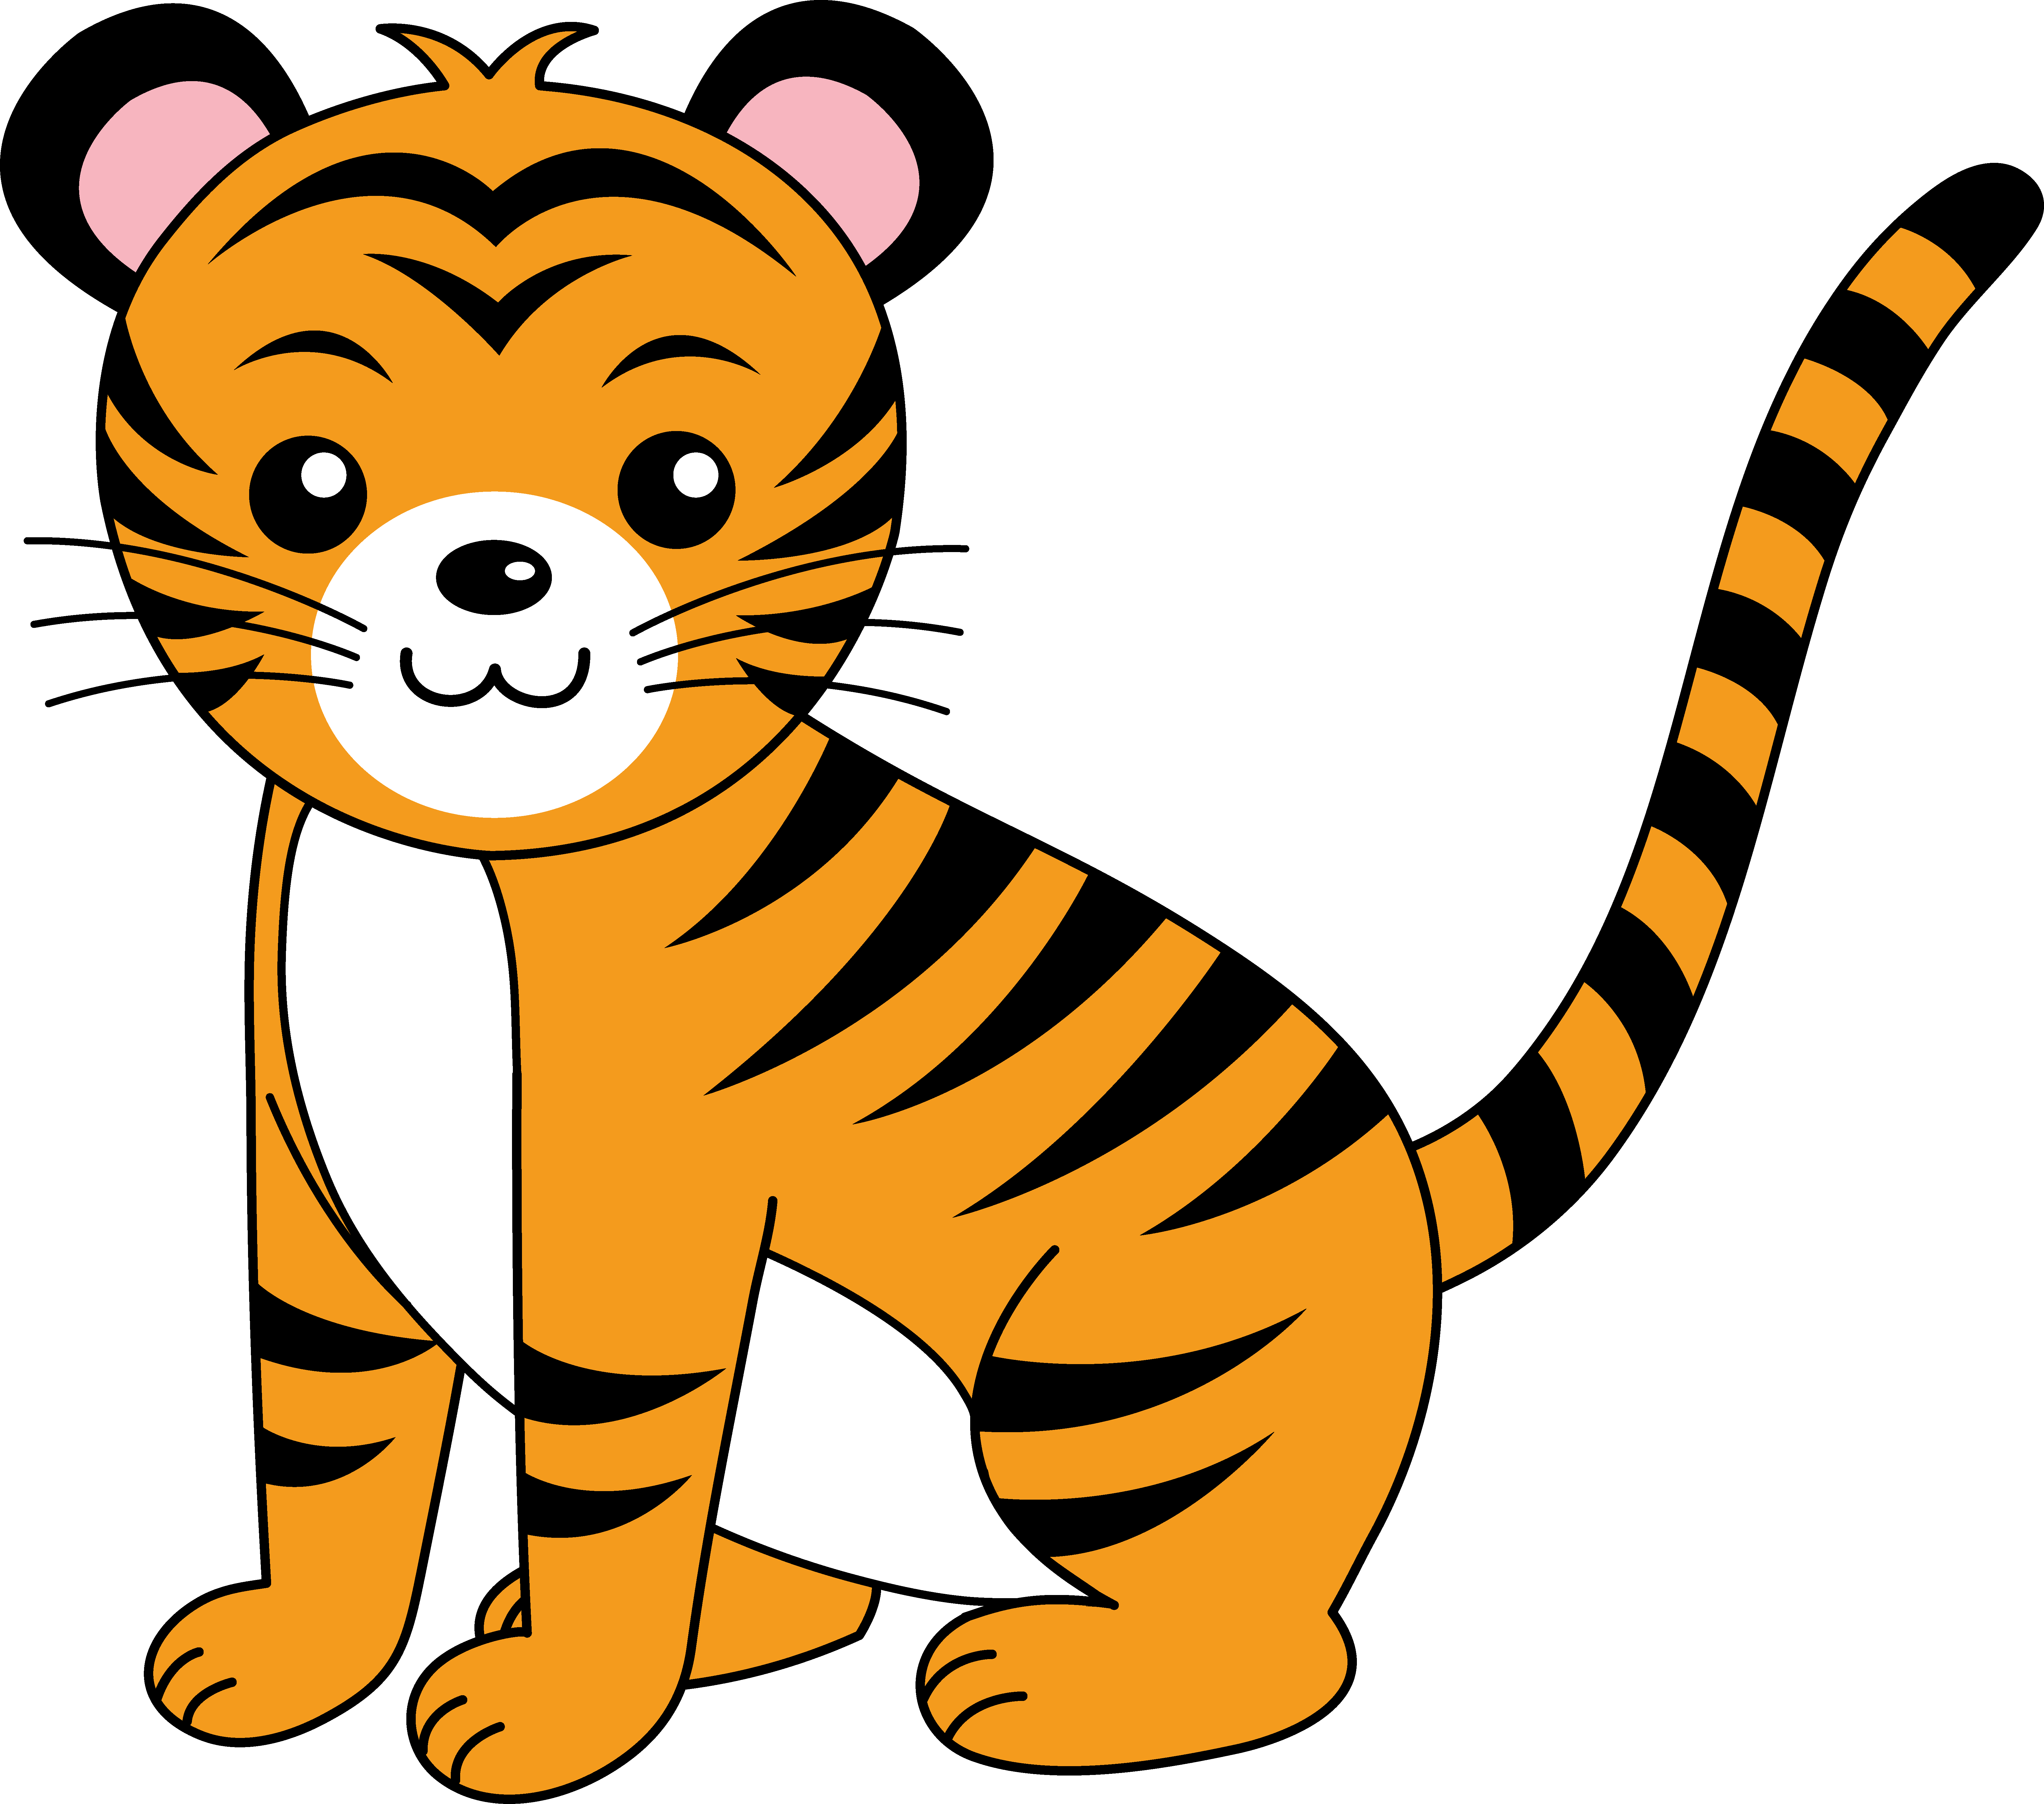 Tiger Cartoon Images - ClipArt Best